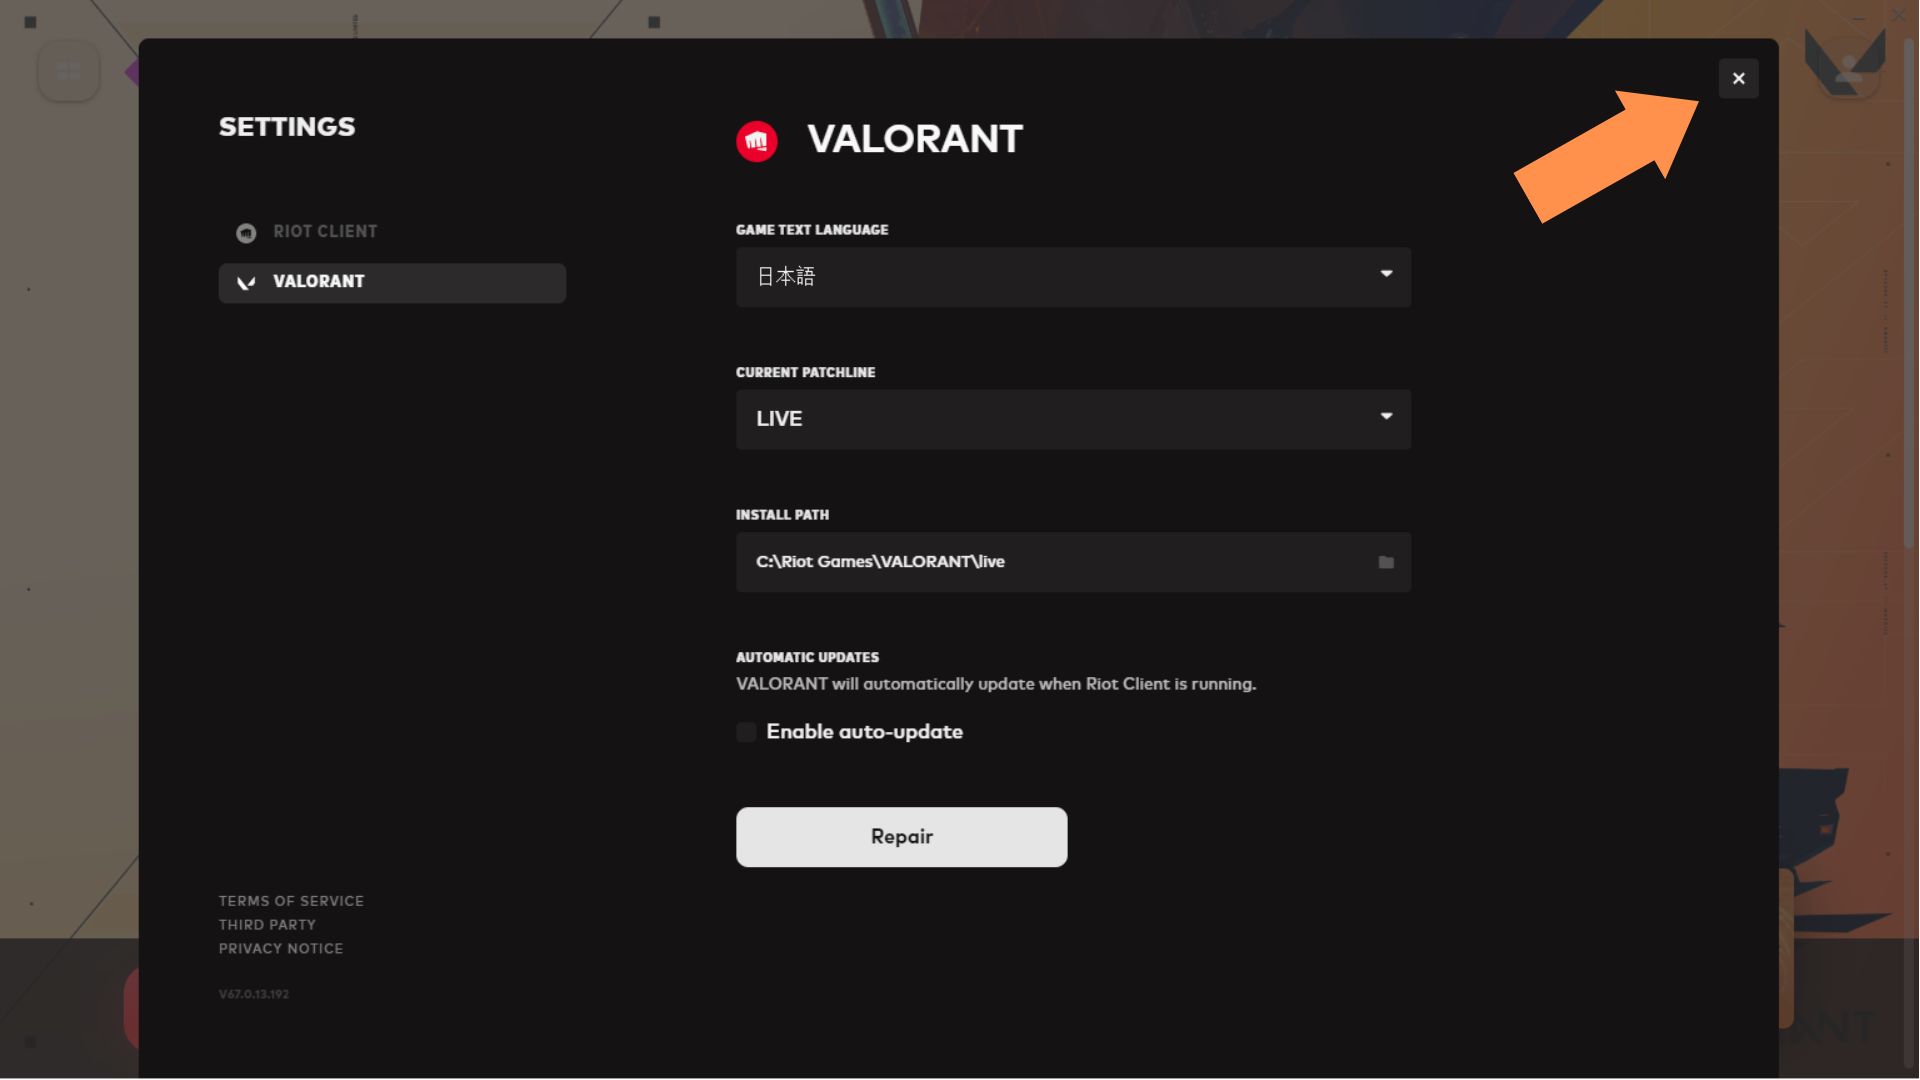 A screenshot of the Valorant settings